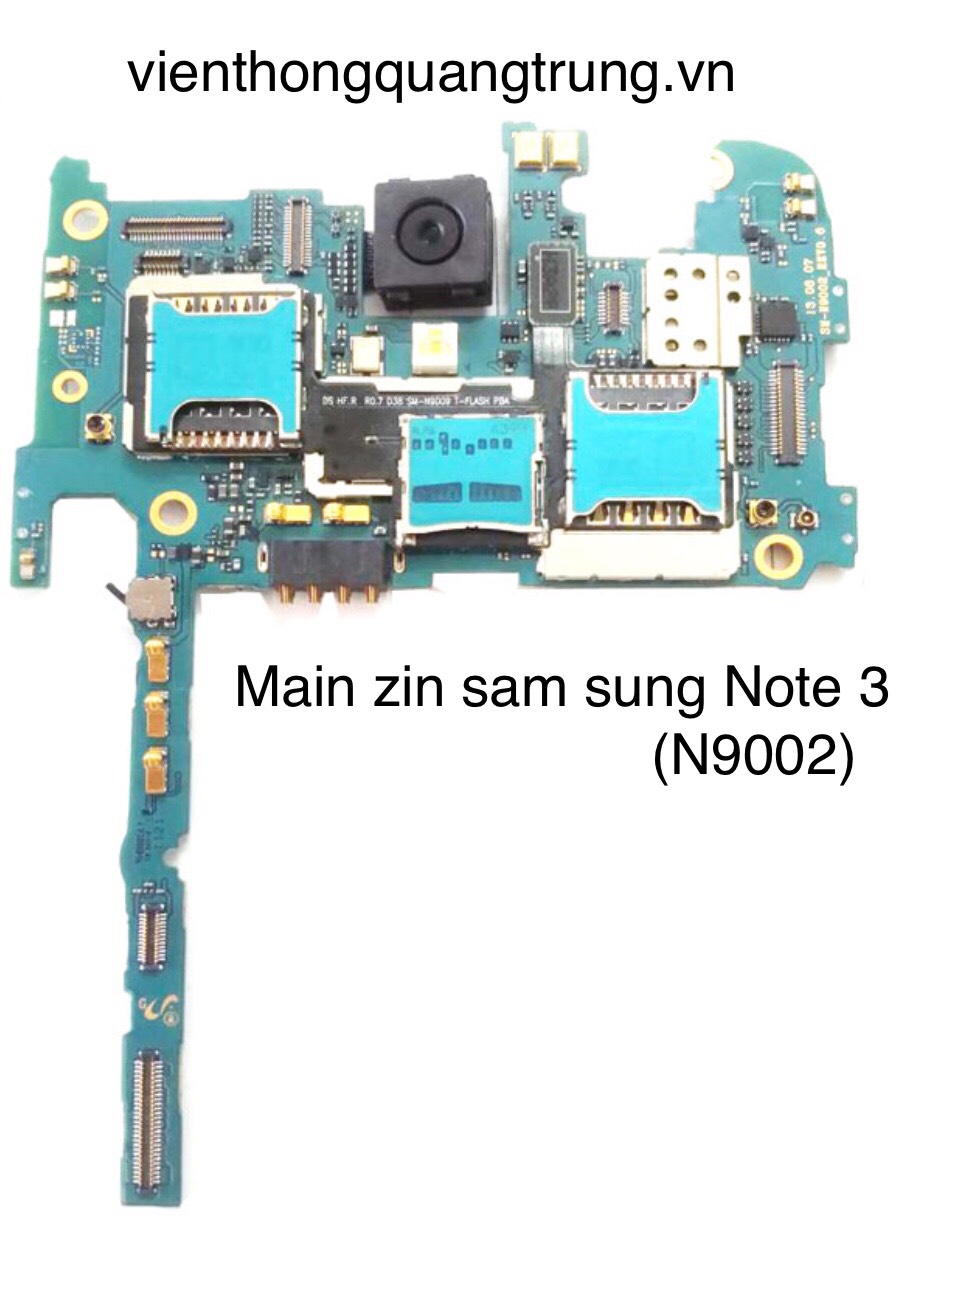 Main zin Samsung Note 3